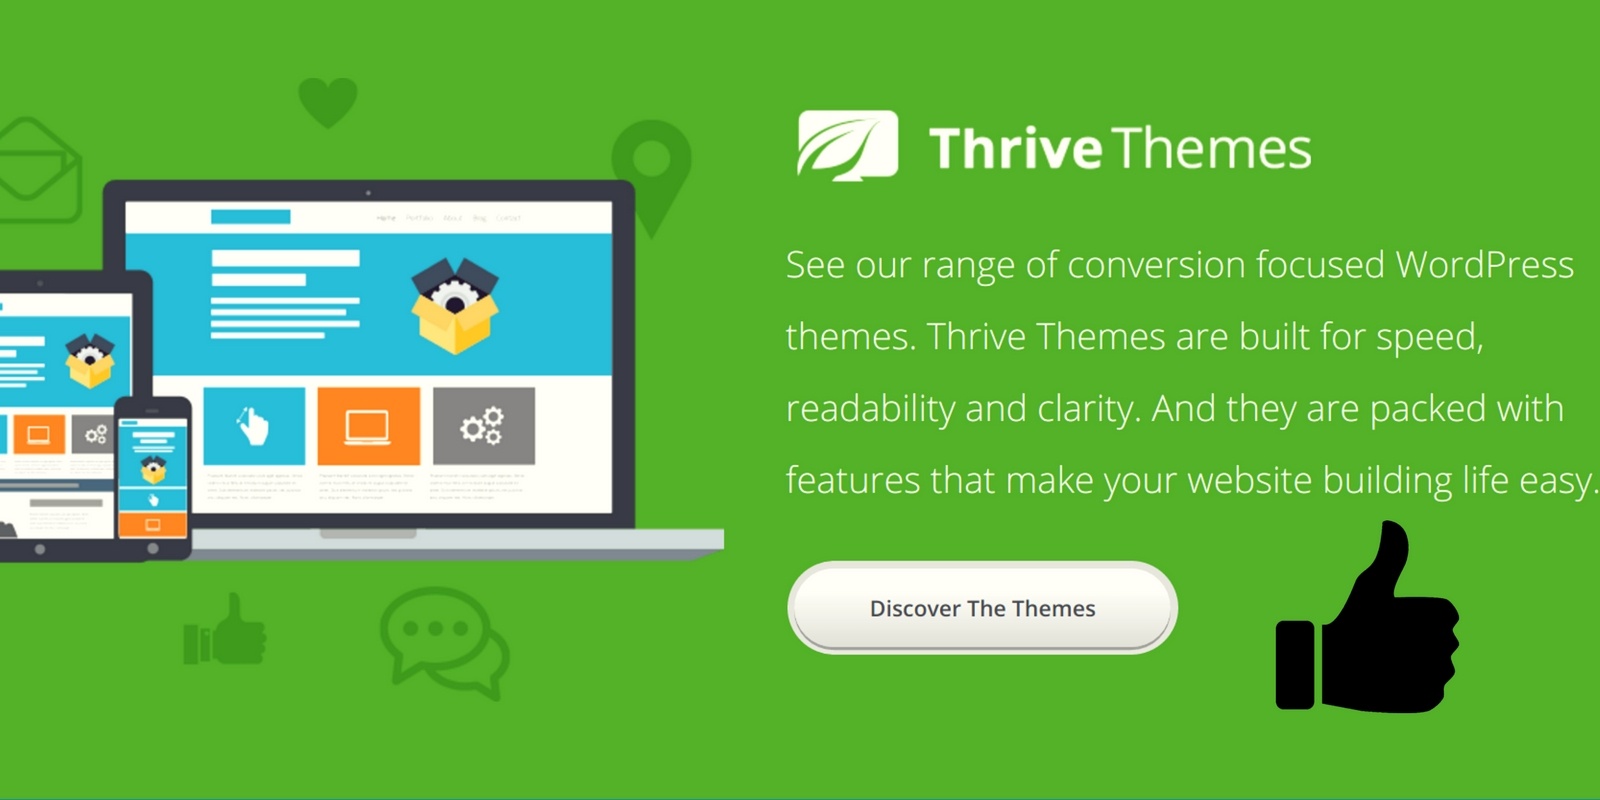 Thrive Themes